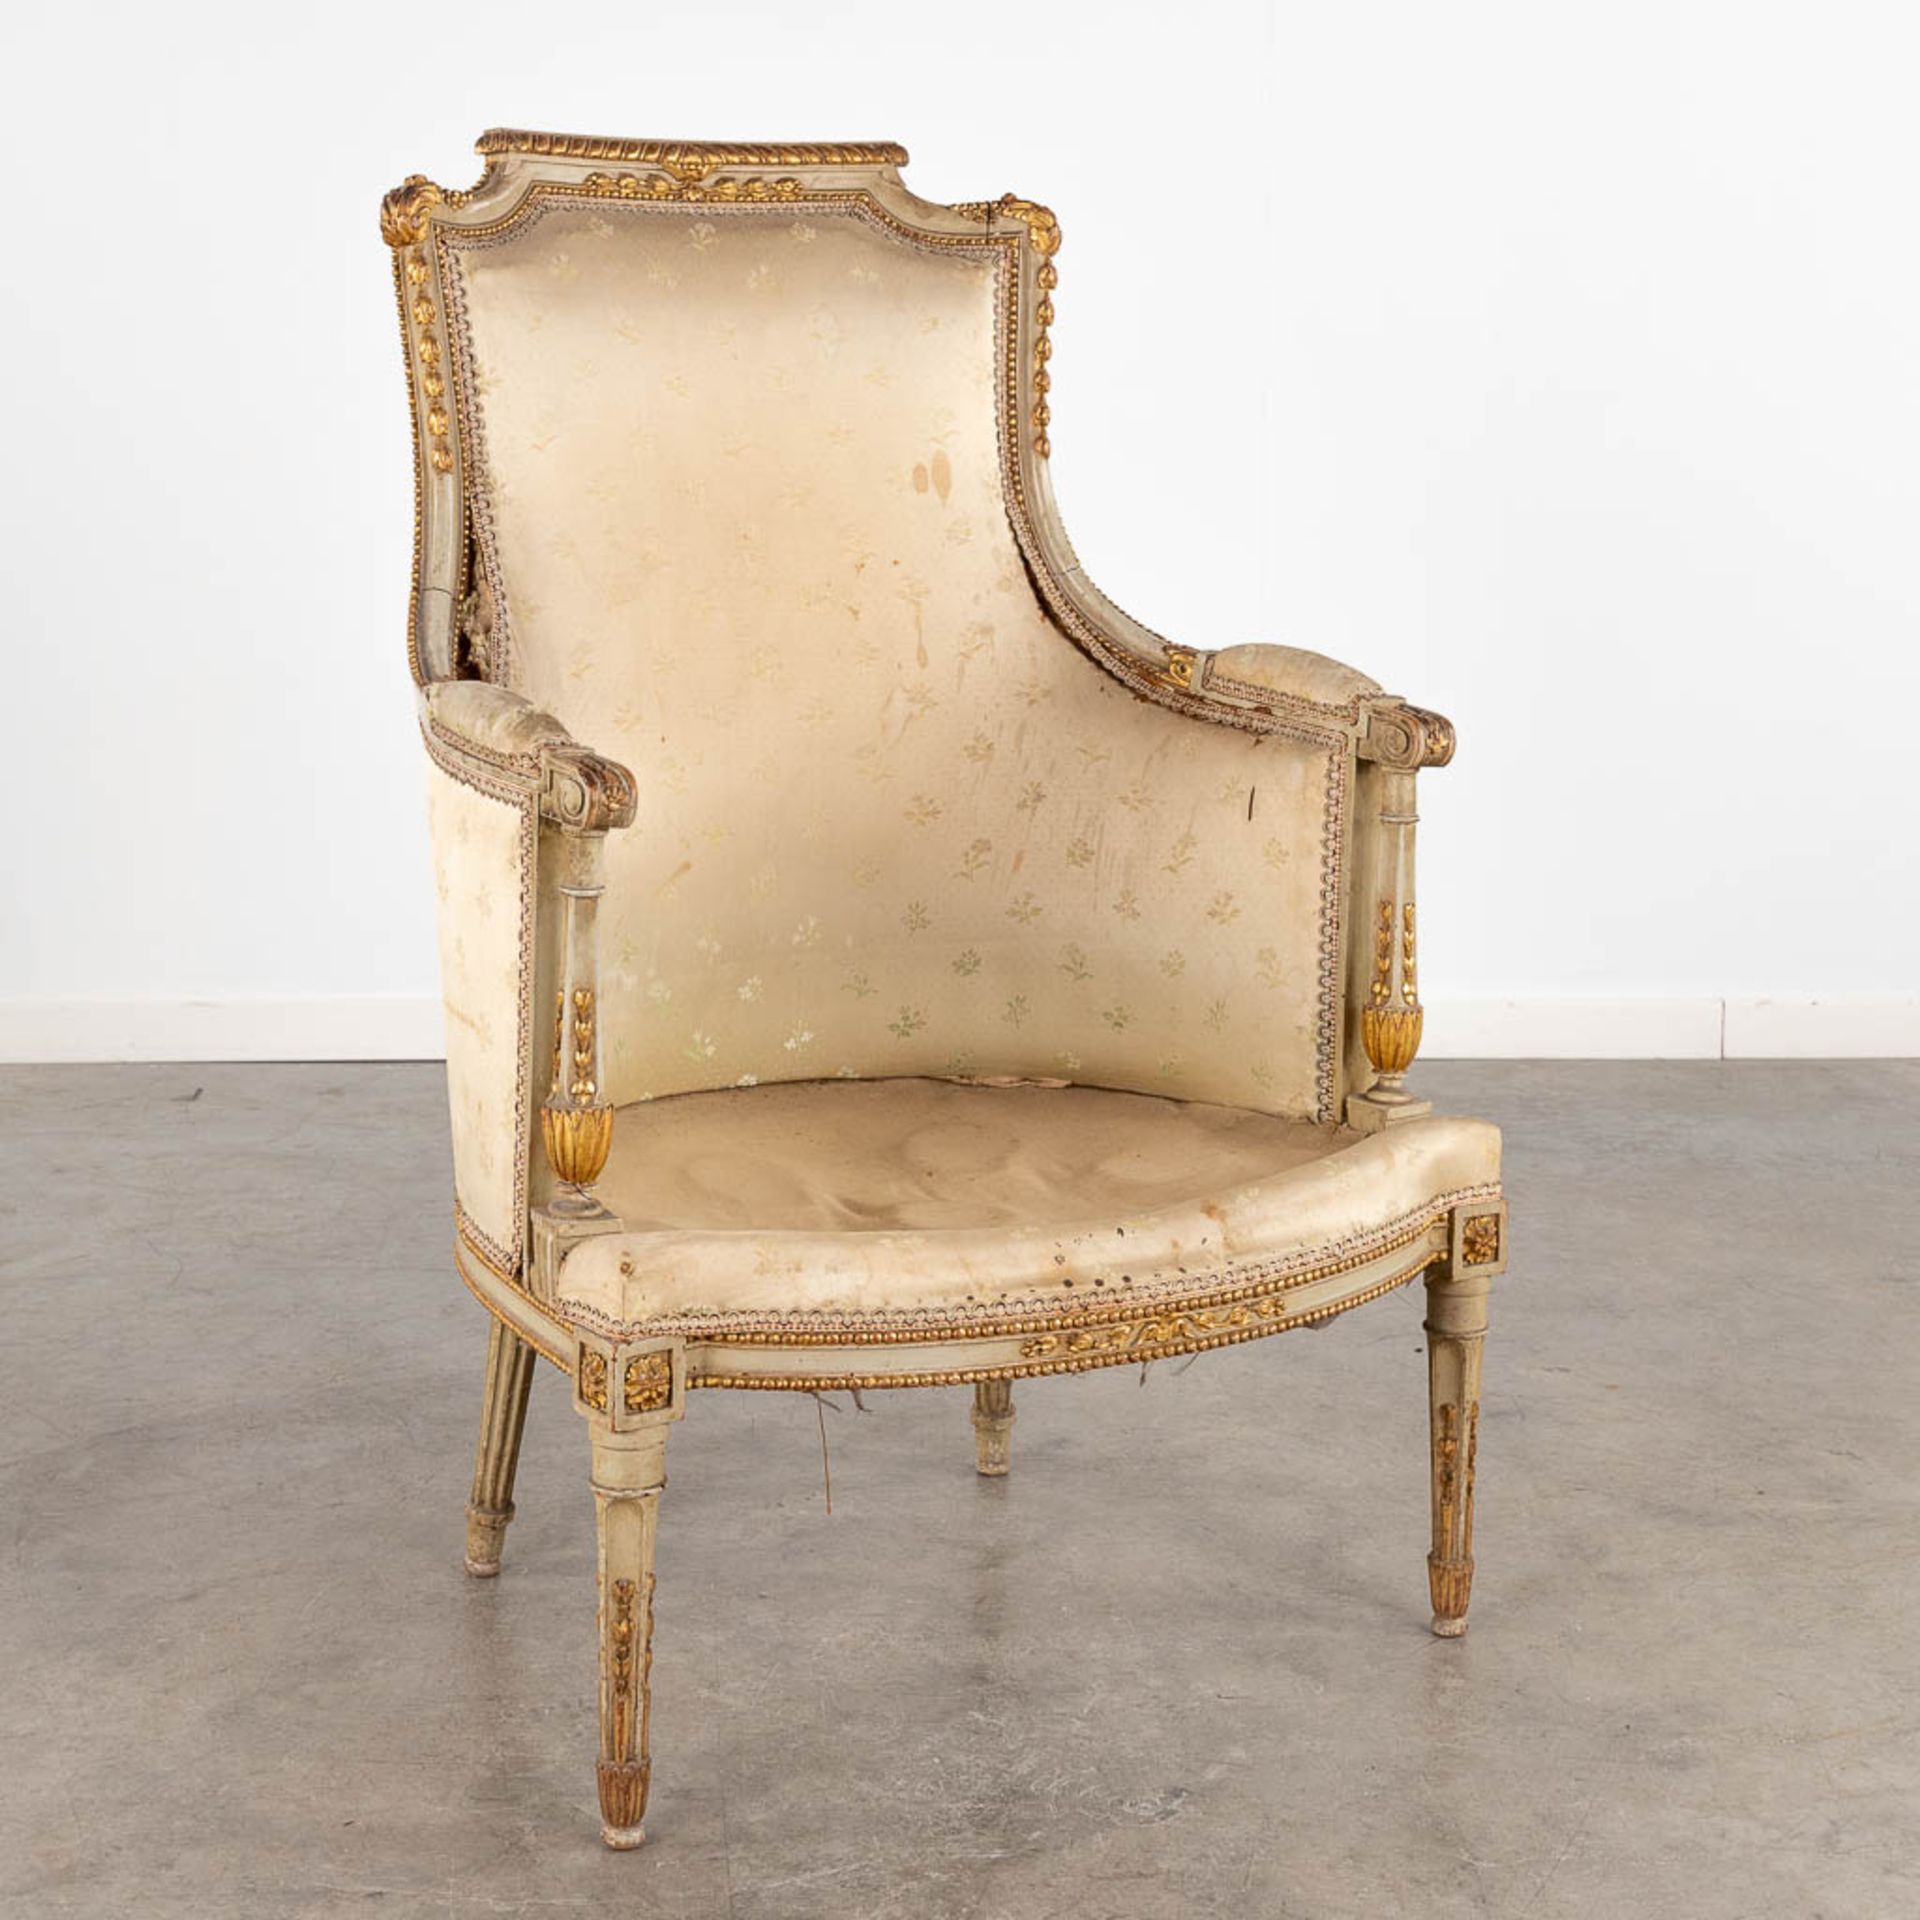 A sculptured armchair, Louis XVI style, 19th C. (D:64 x W:65 x H:100 cm) - Image 3 of 16